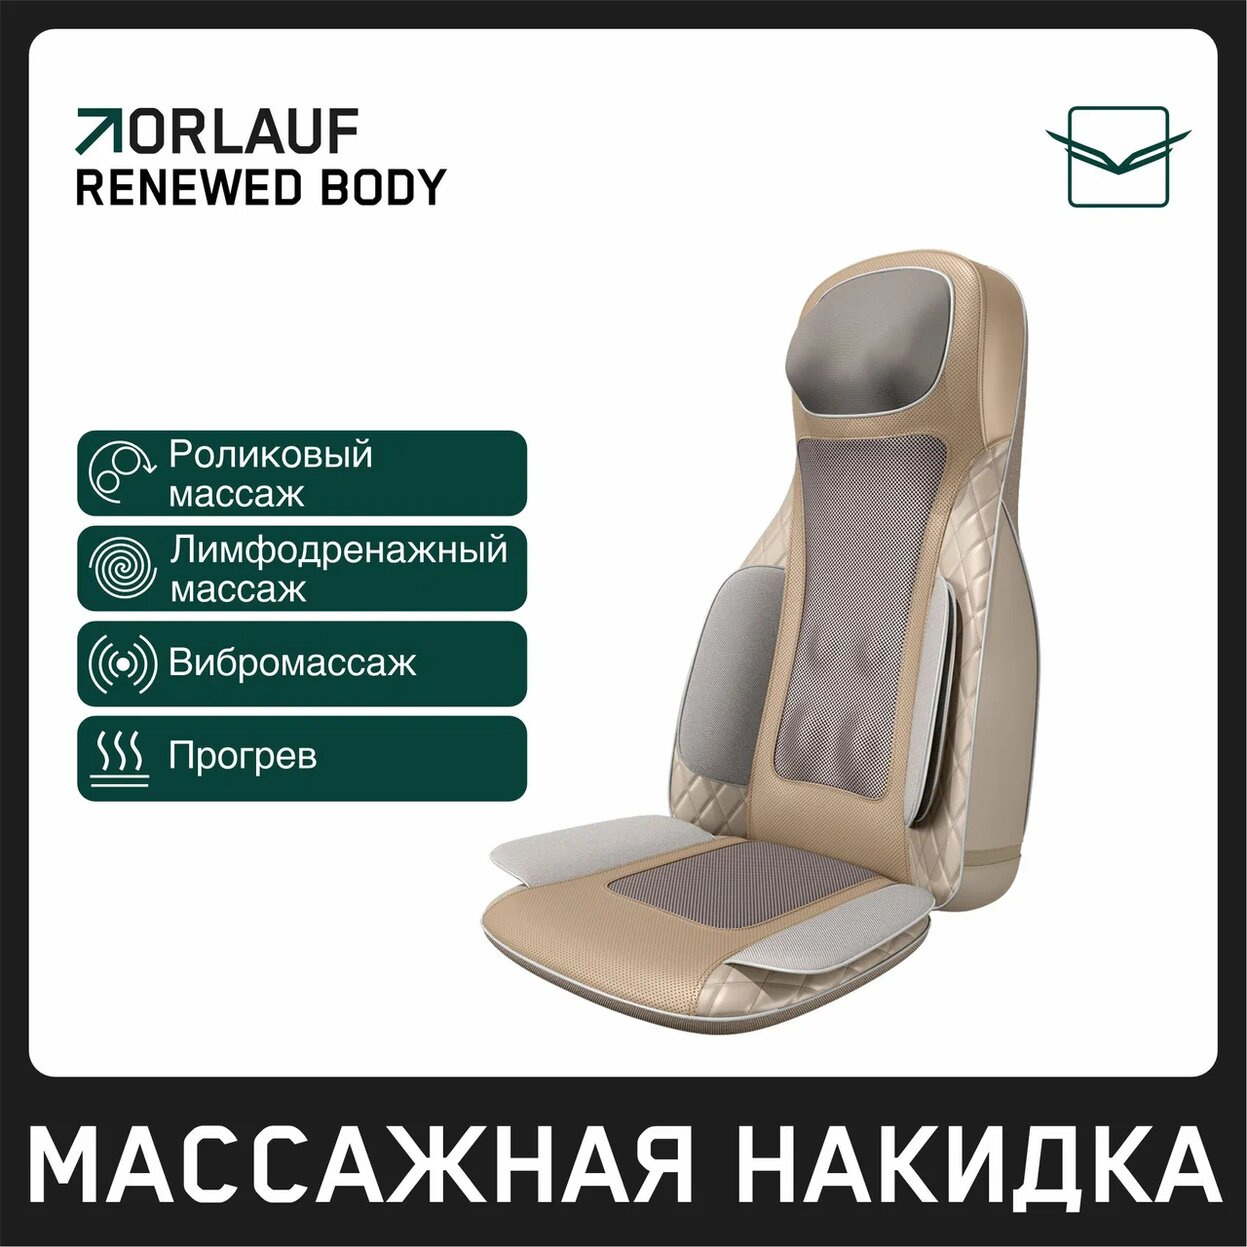 Orlauf Renewed Body из каталога устройств для массажа в Казани по цене 39900 ₽